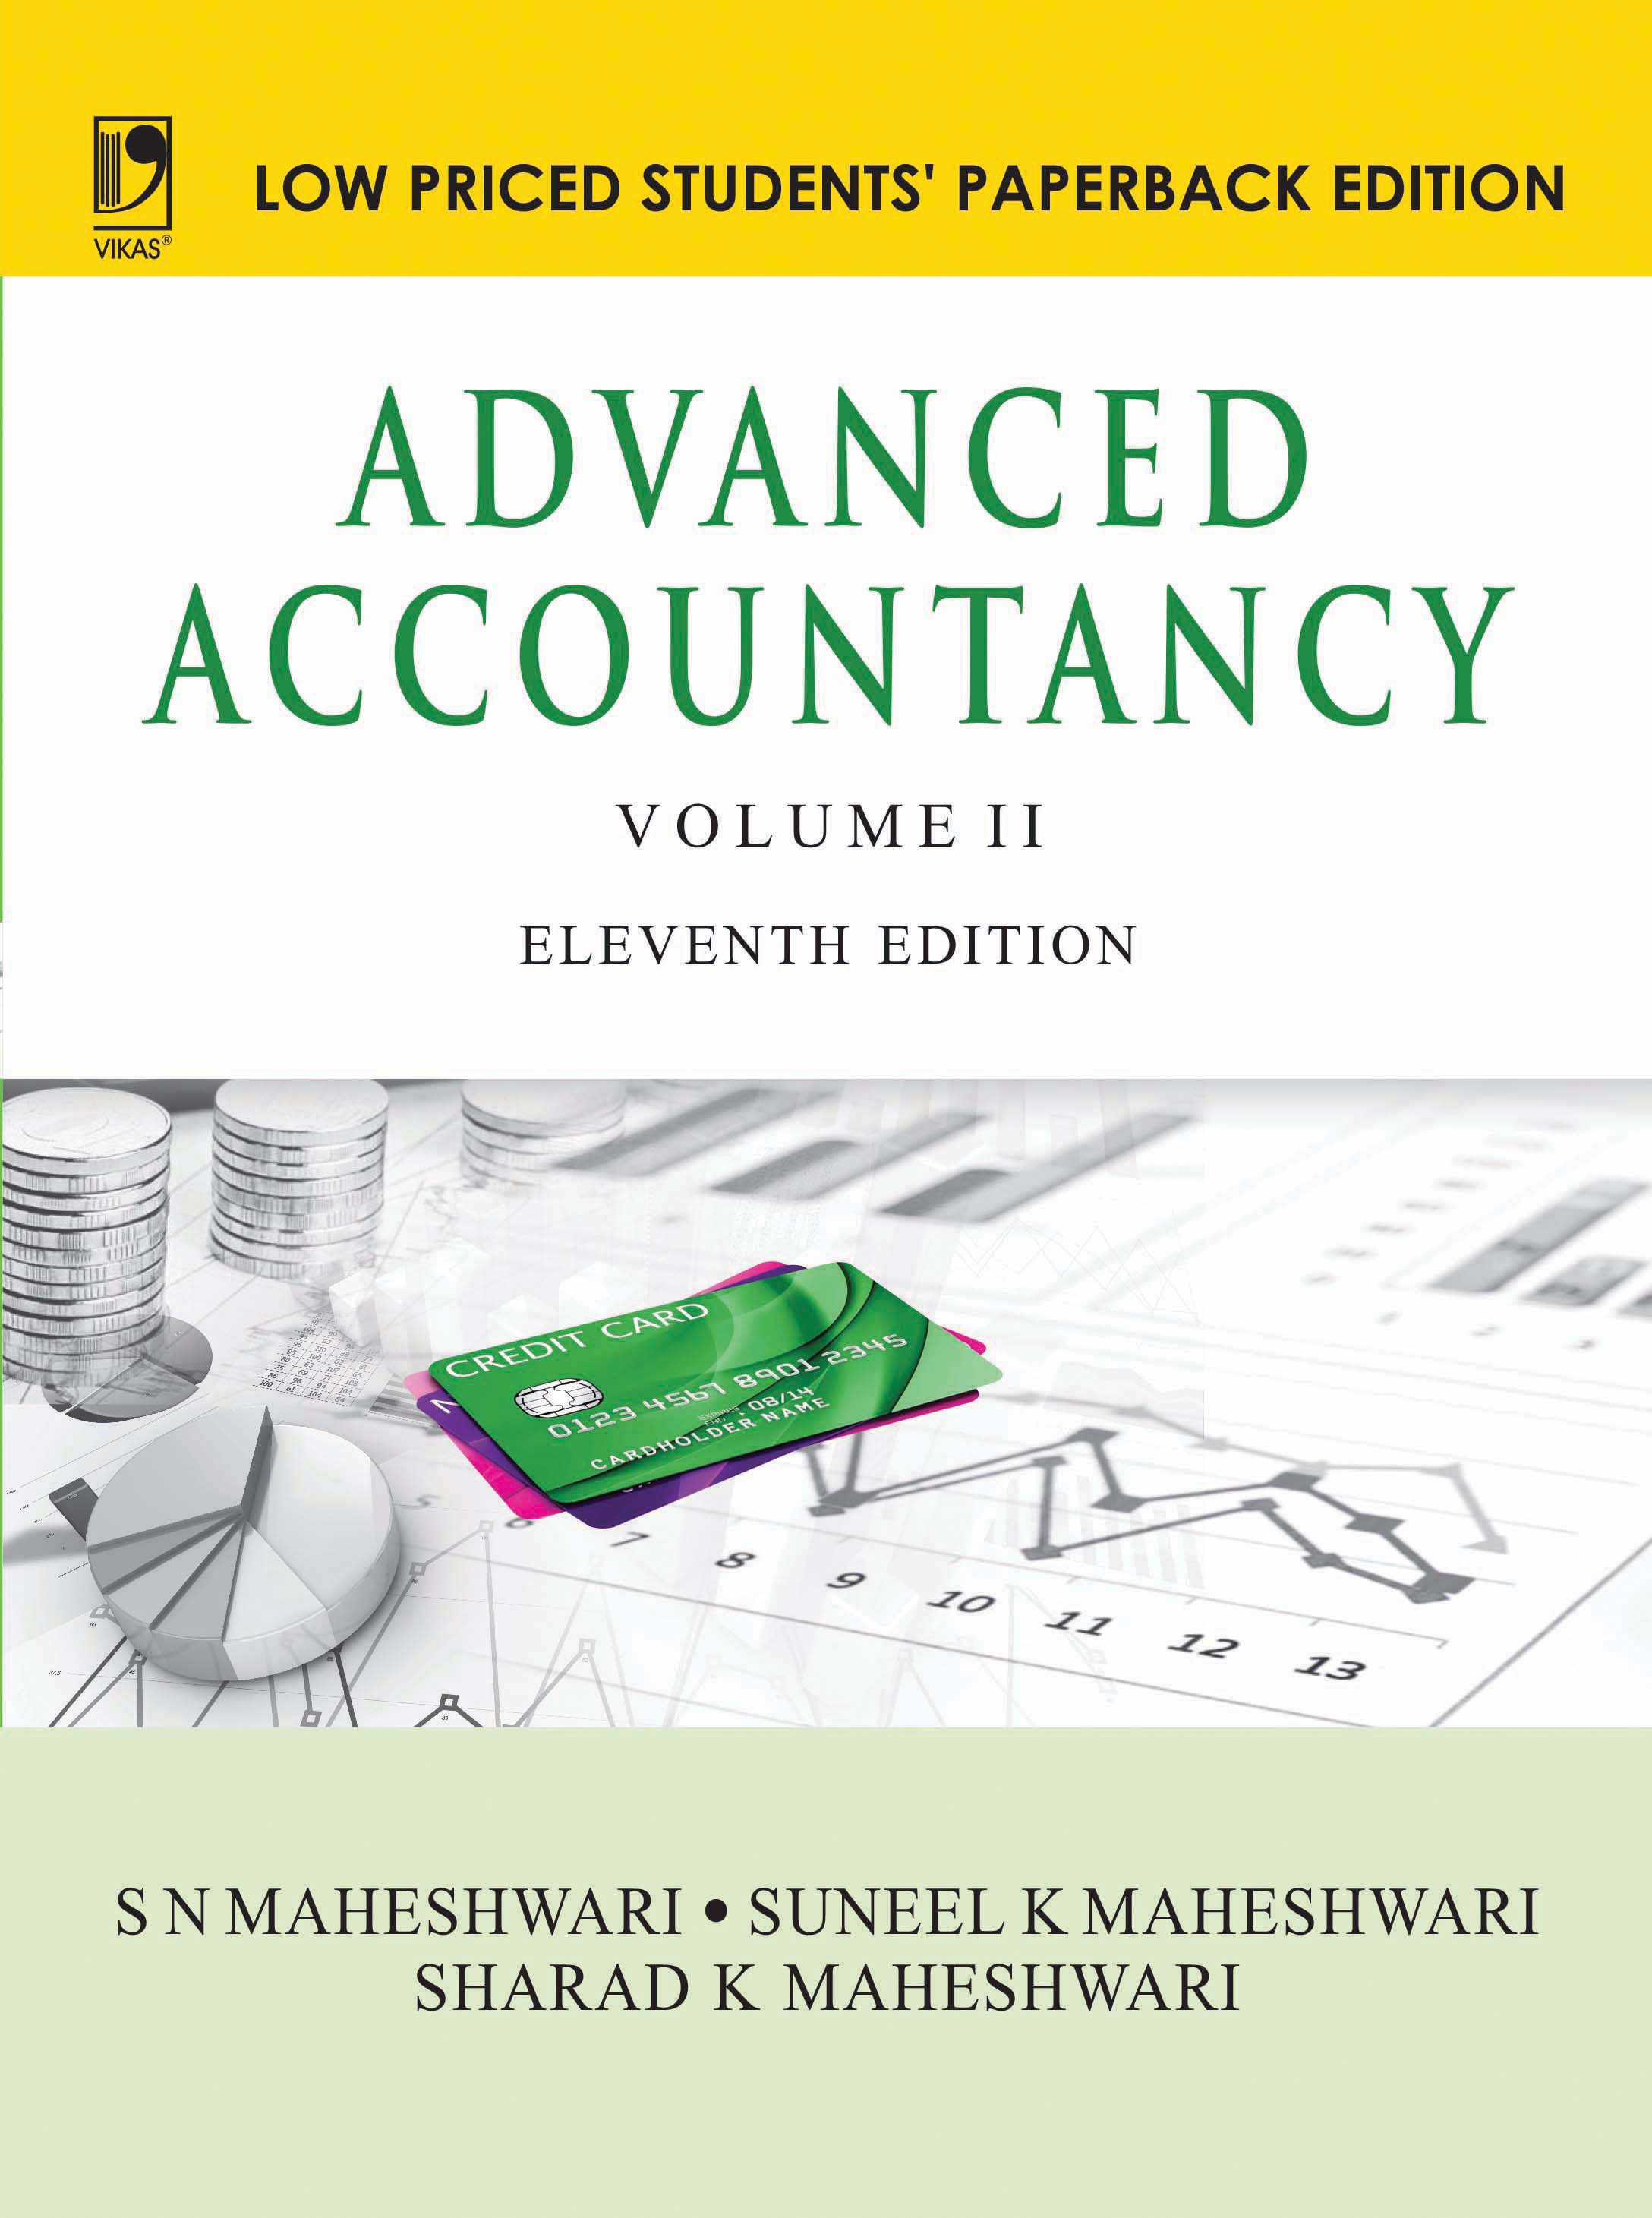 Advanced Accountancy Volume-II (LPSPE)